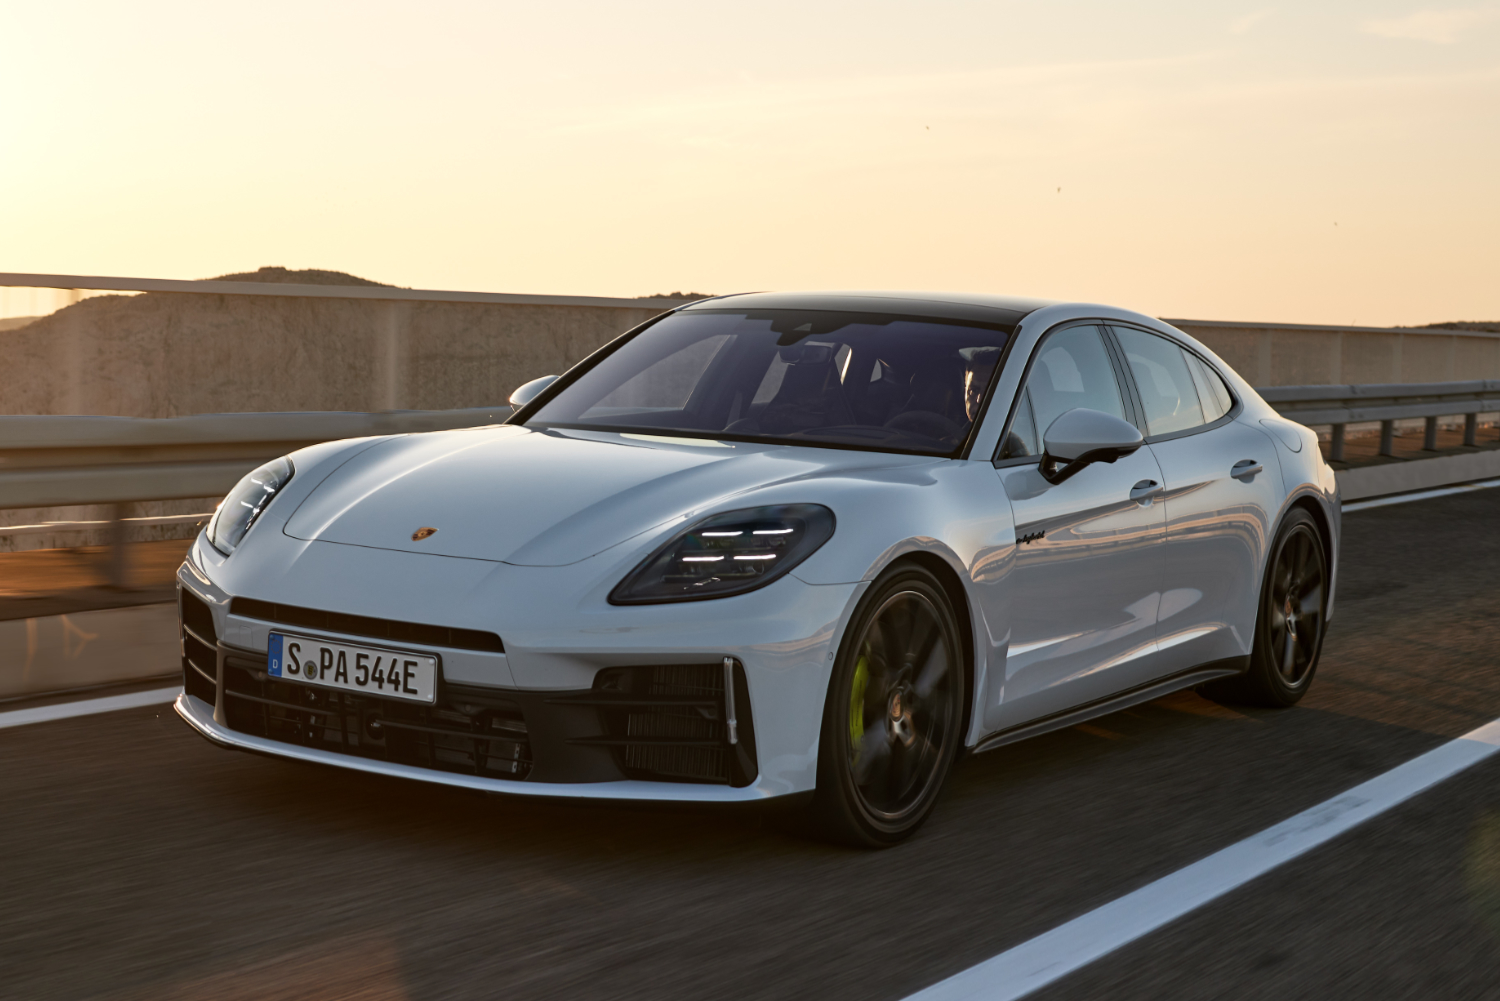 Porsche adds more hybrids to new Panamera range. Image by Porsche.